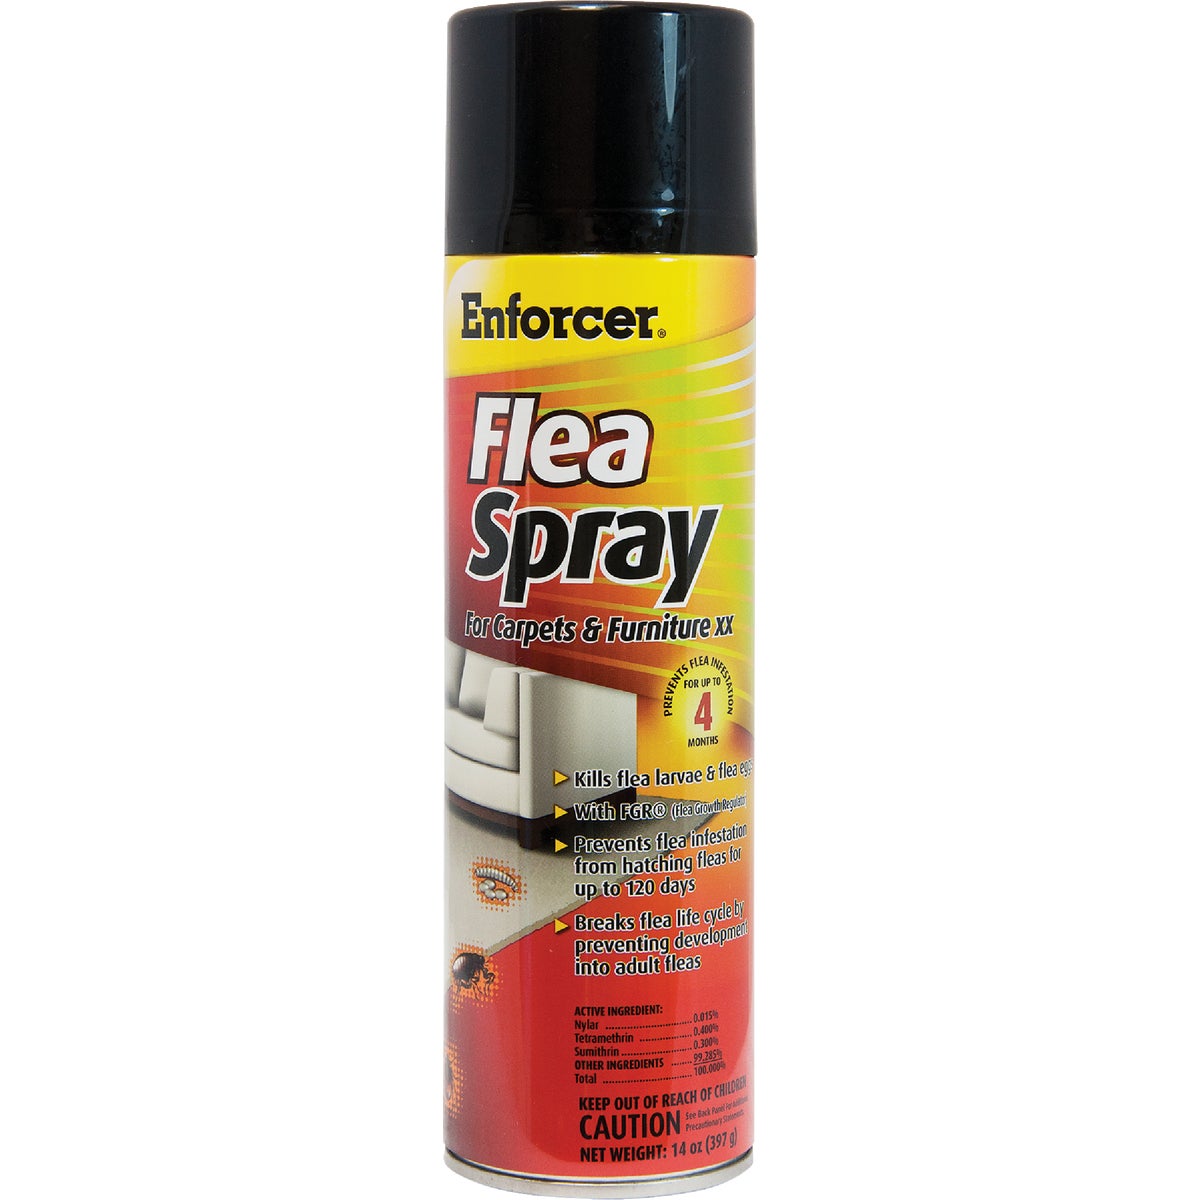 Item 702110, Ideal flea spray for carpets and furniture featuring flea growth regulator